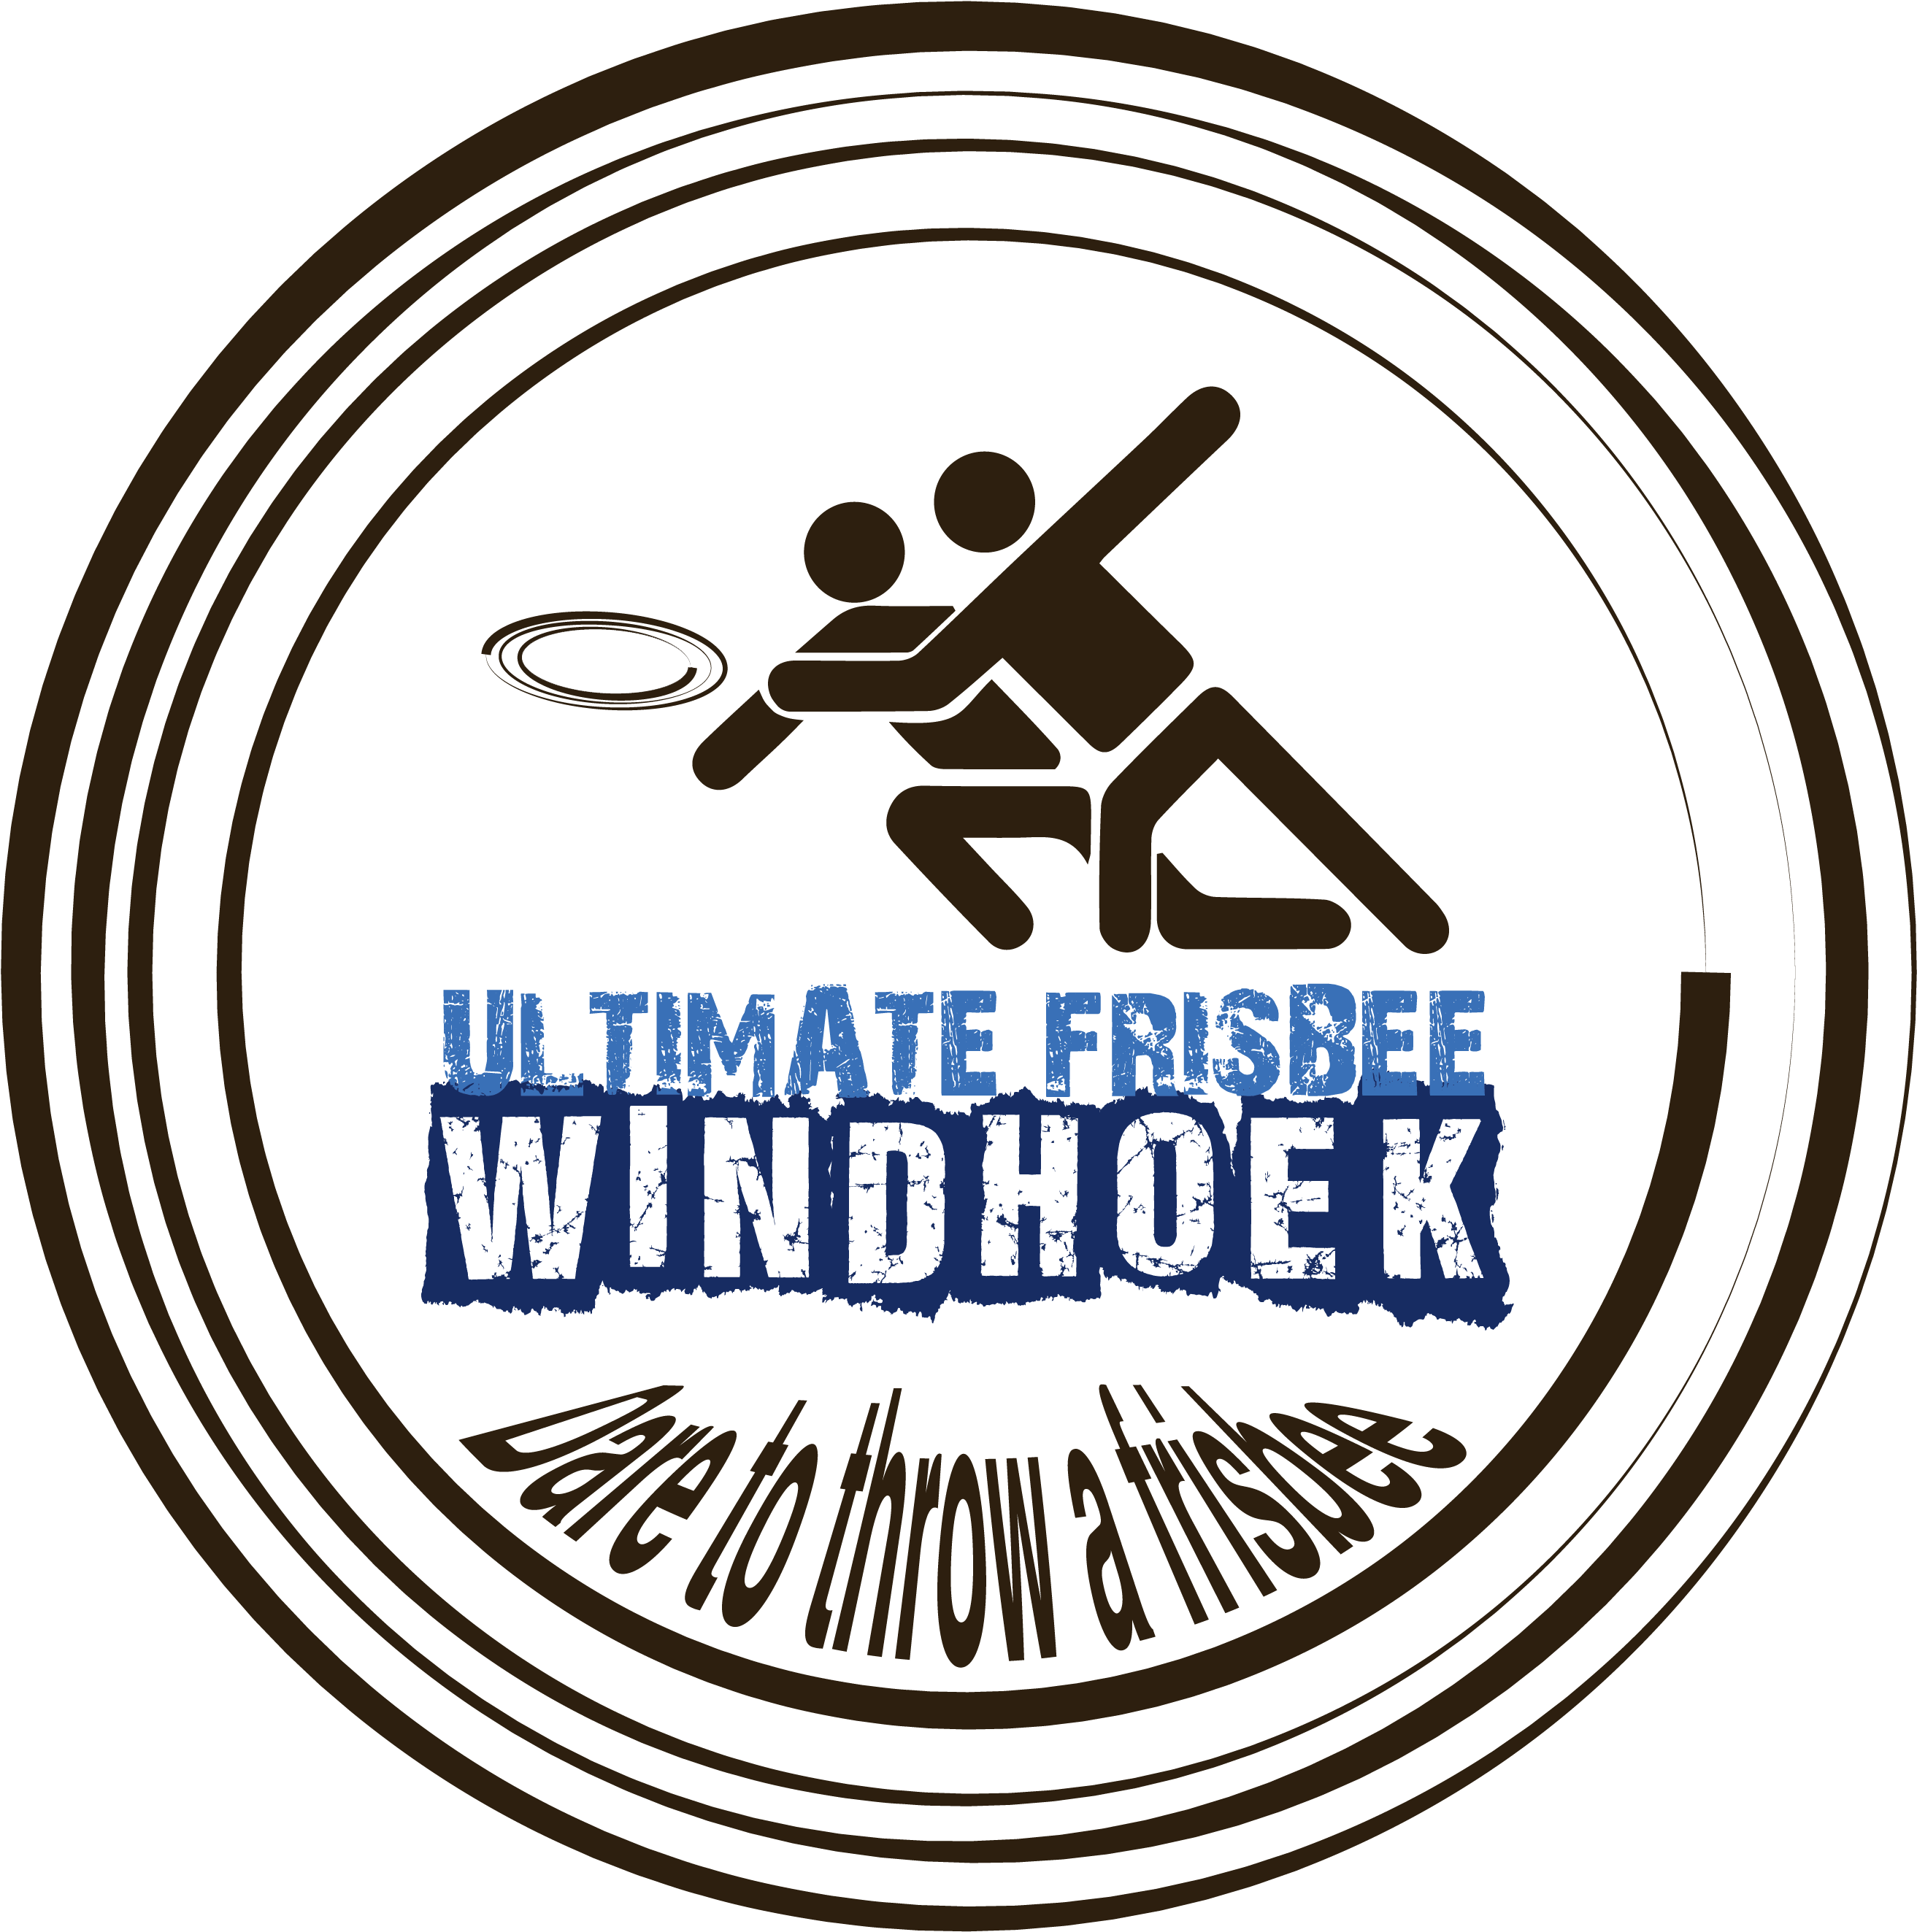 Ultimate Frisbee Winshoek-02, Hd Png Download